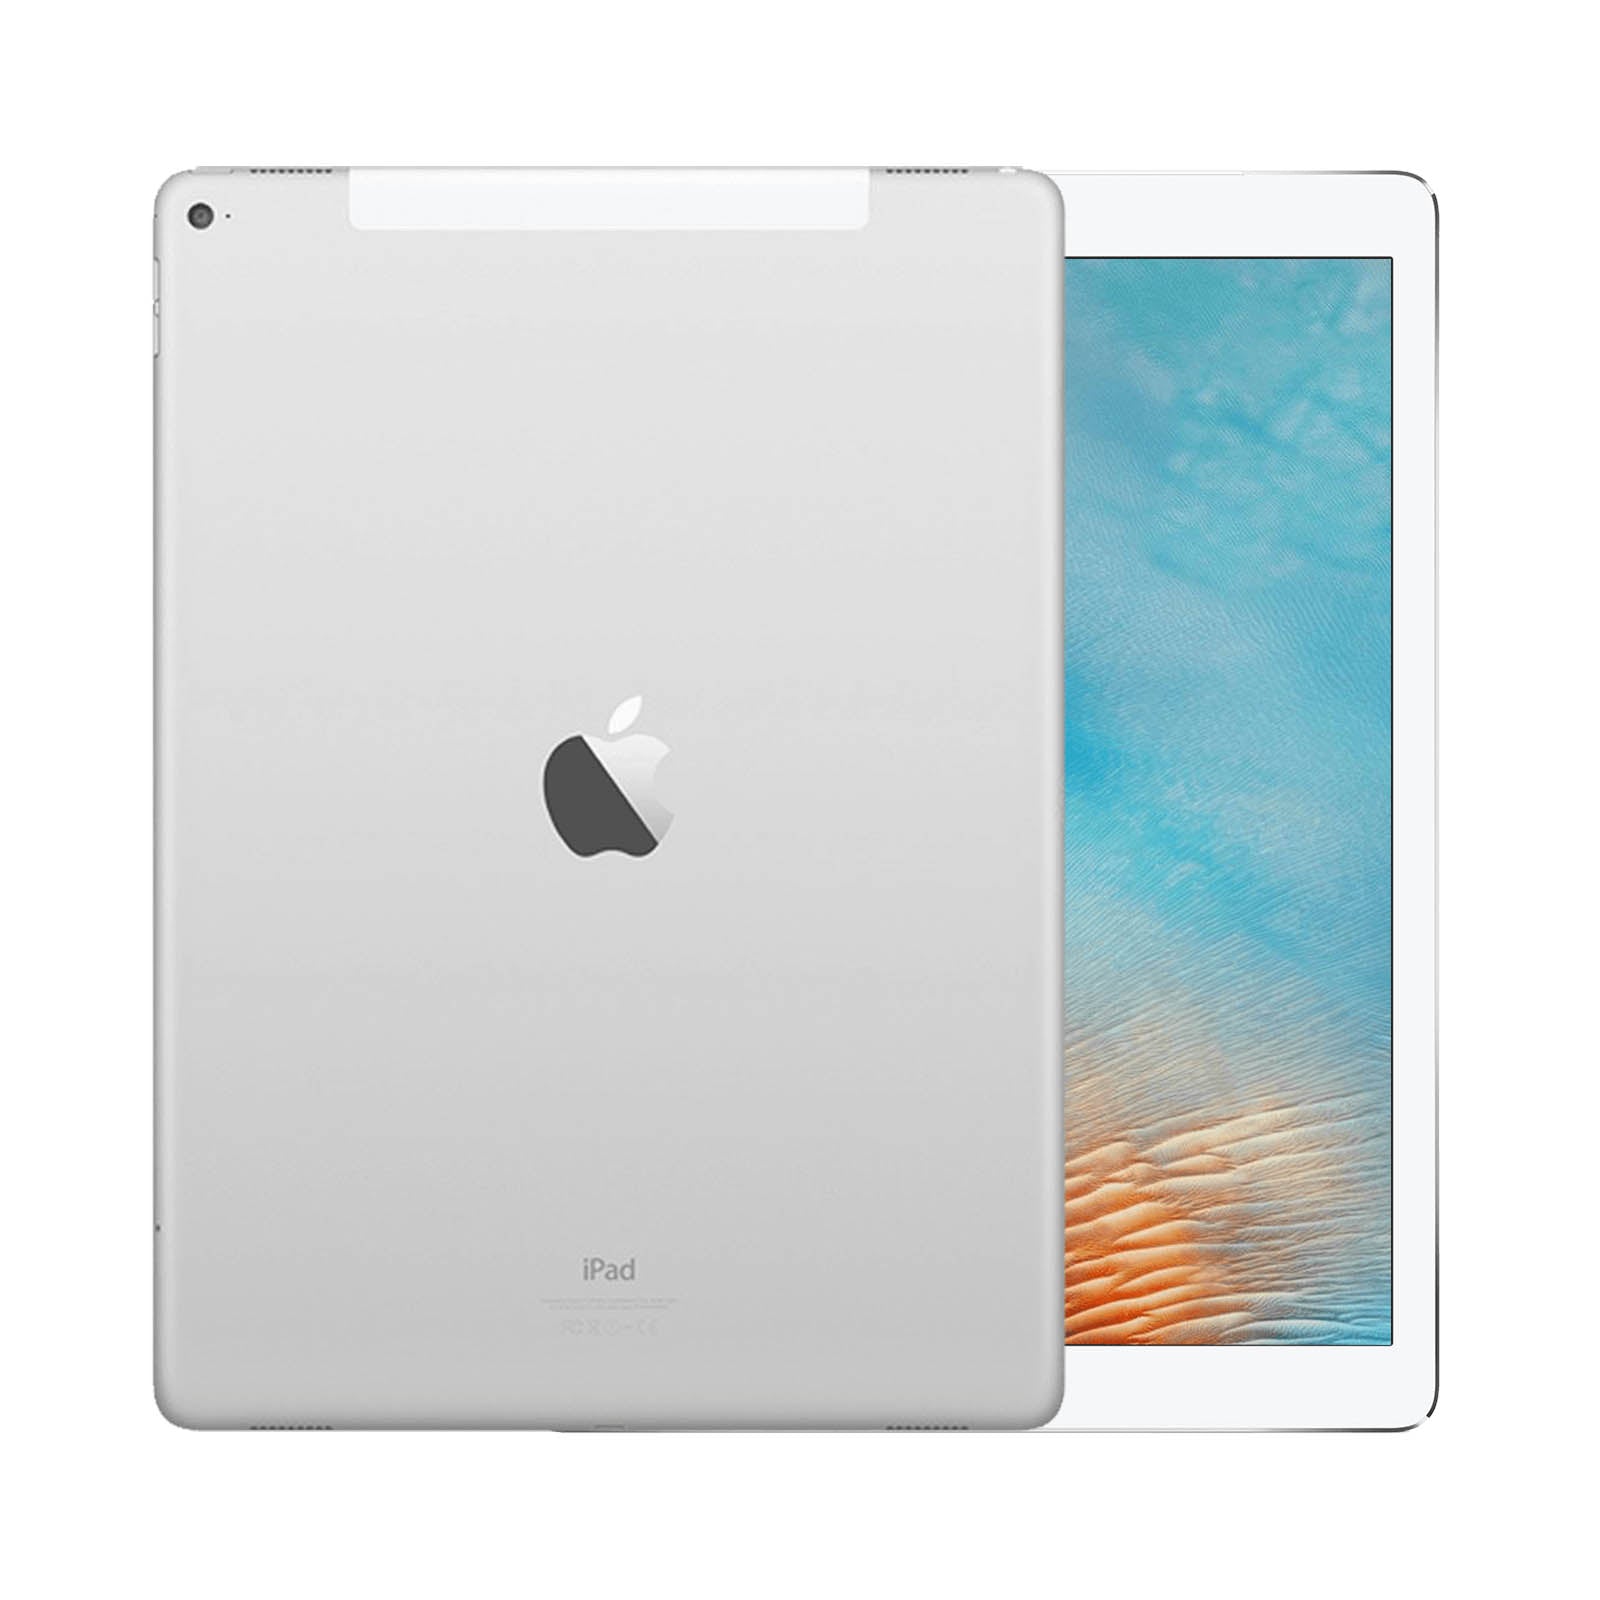 iPad Pro 12.9 Inch 2nd Gen 512GB Silver Good - Unlocked